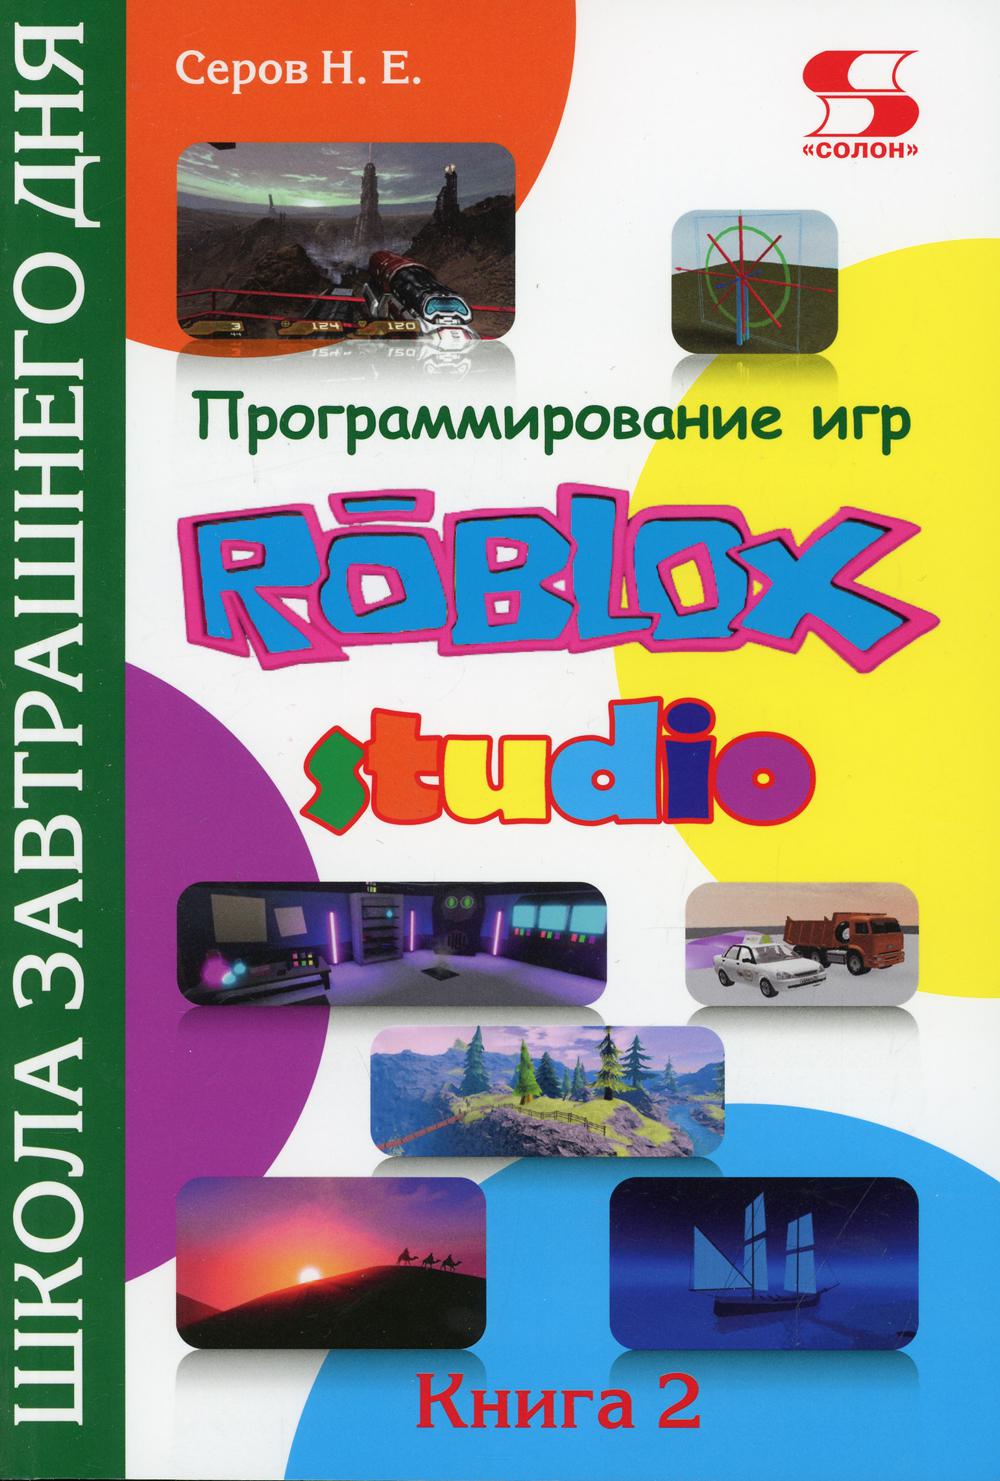    Roblox Studio.  2